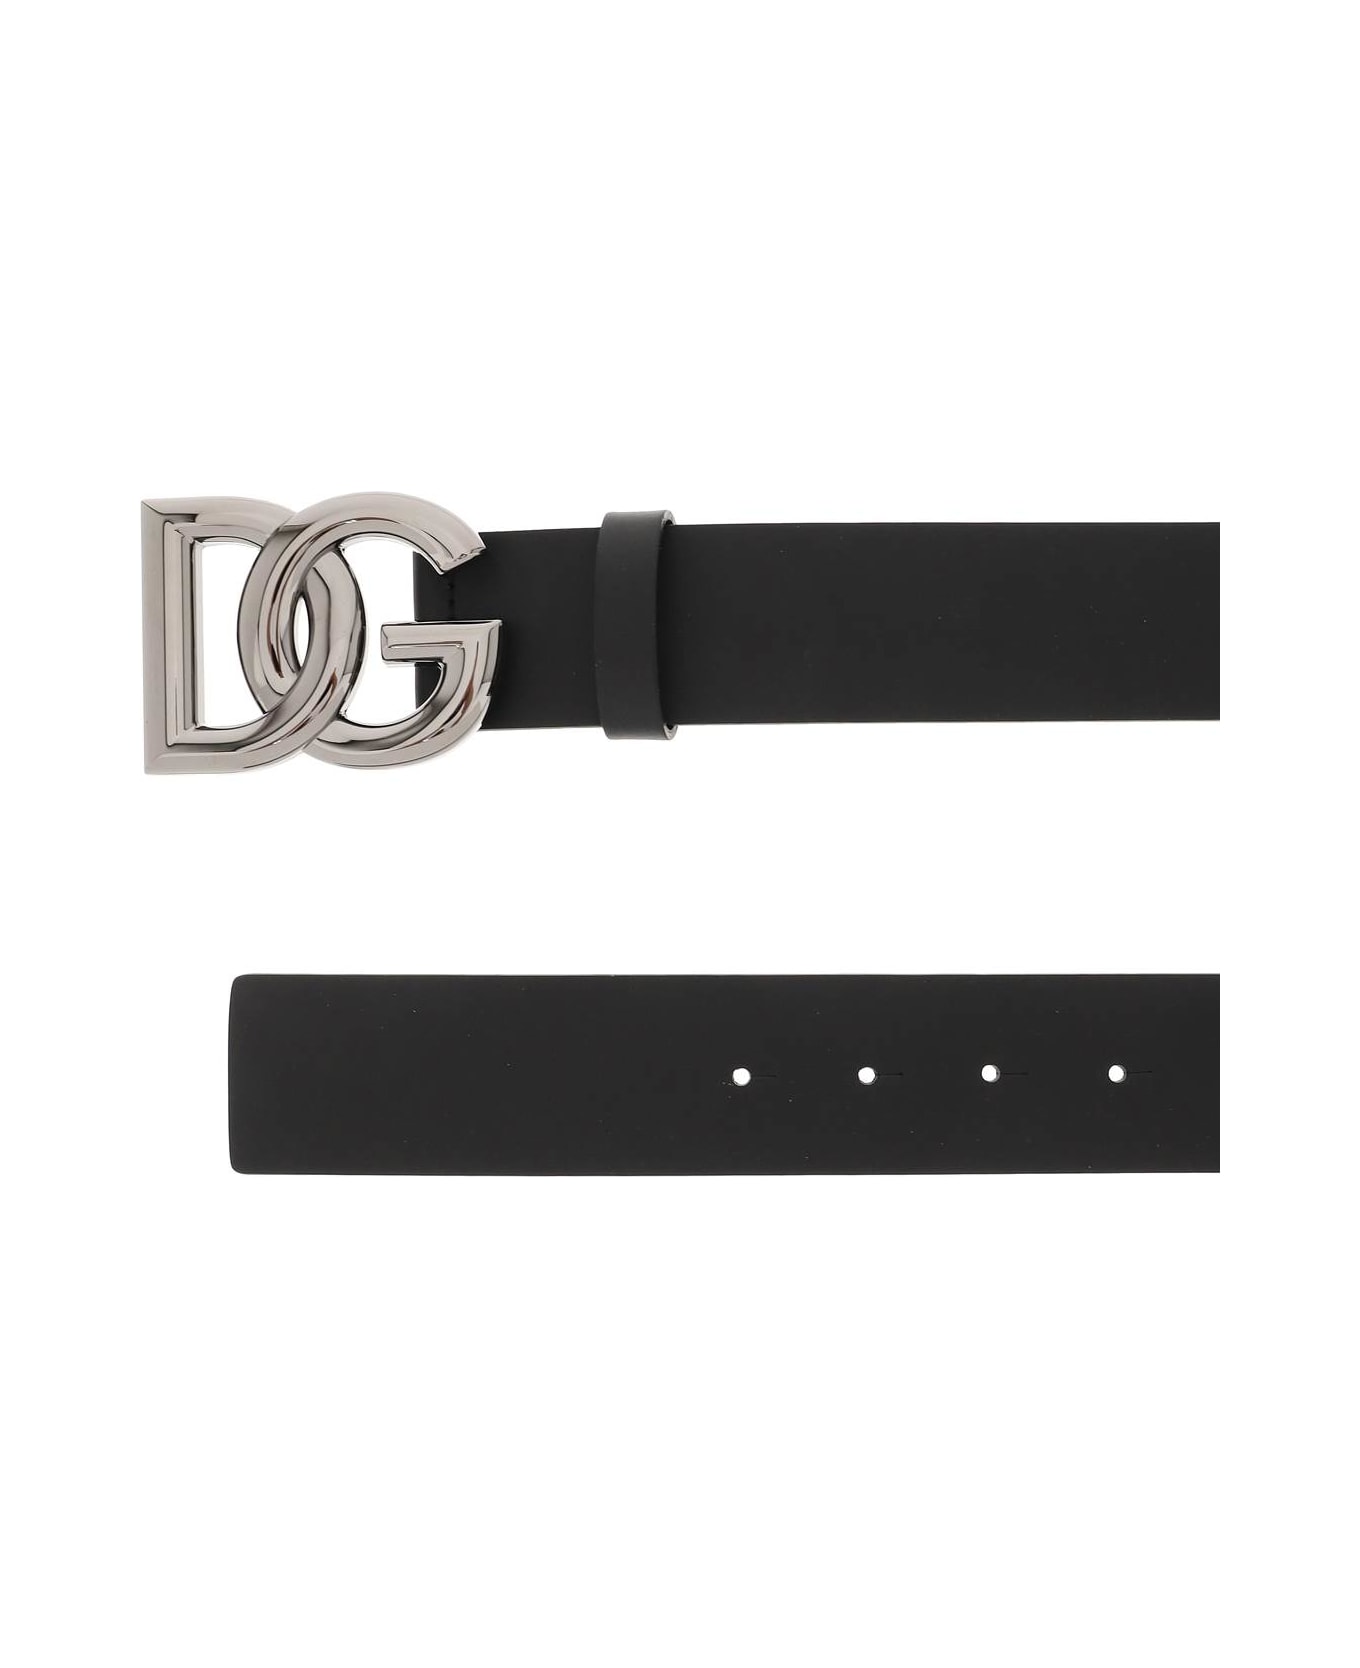 Dolce & Gabbana Dg Logo Buckle Belt - Black ベルト